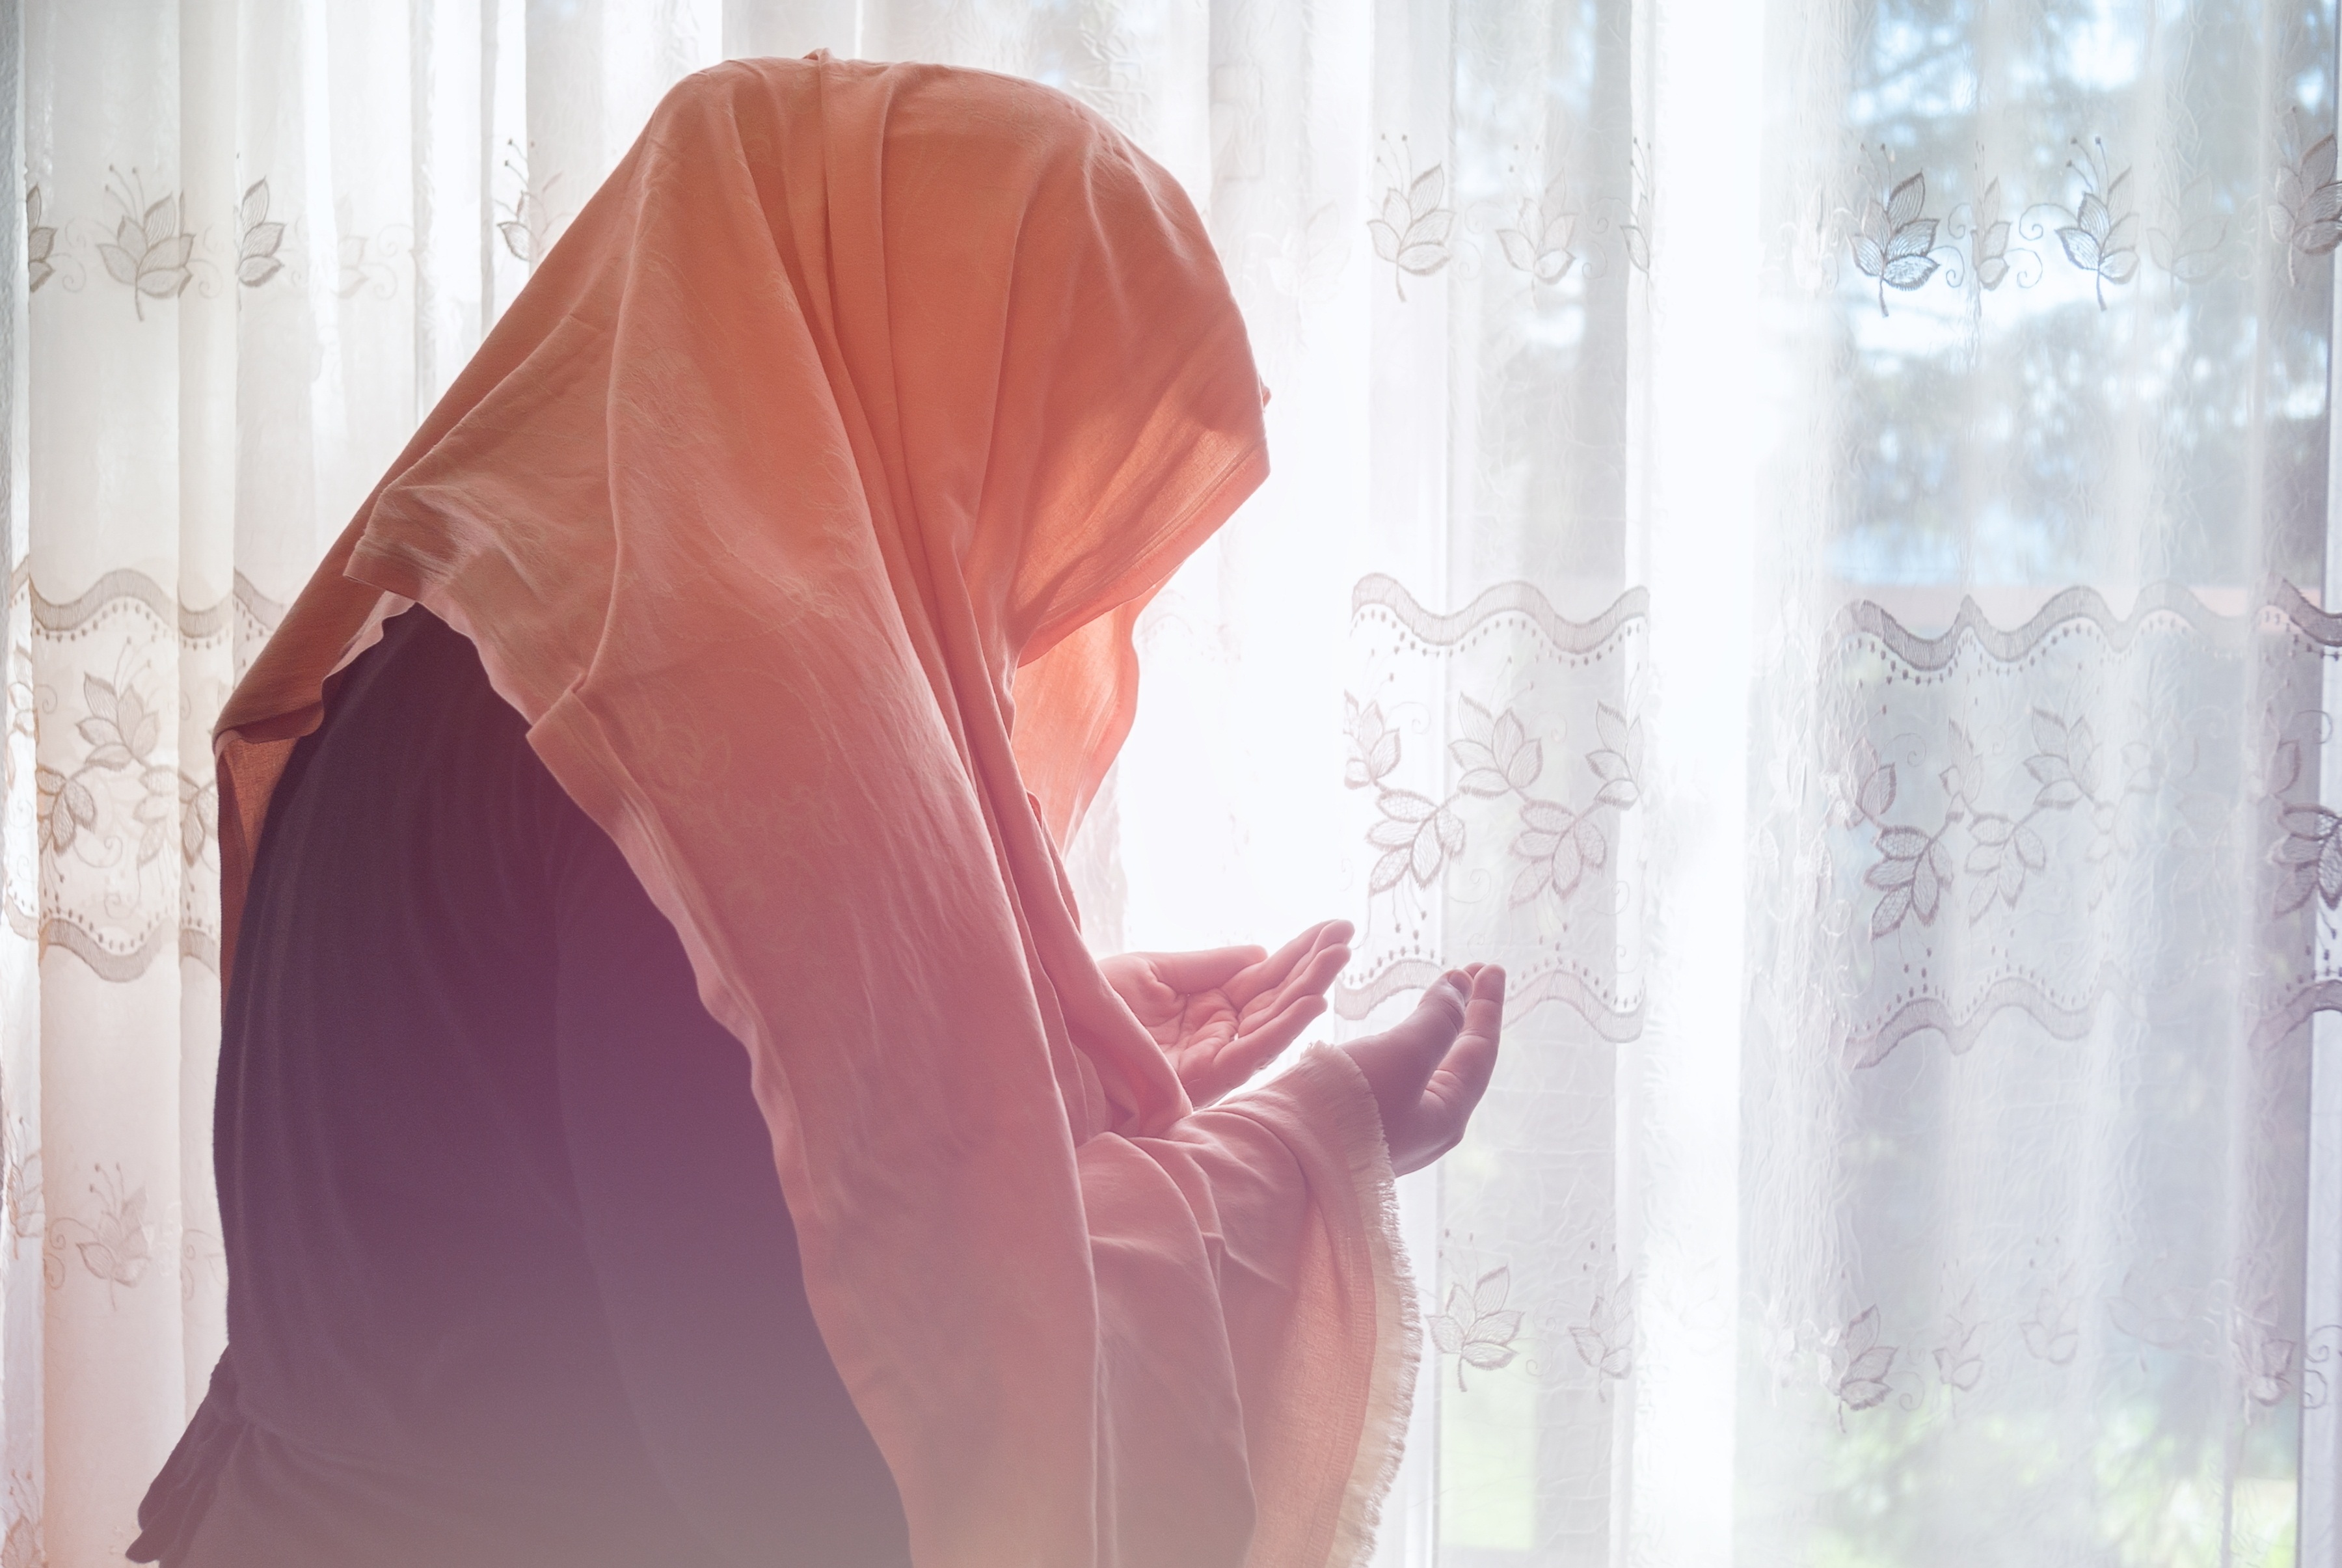 Cautand femeia musulmana convertita)